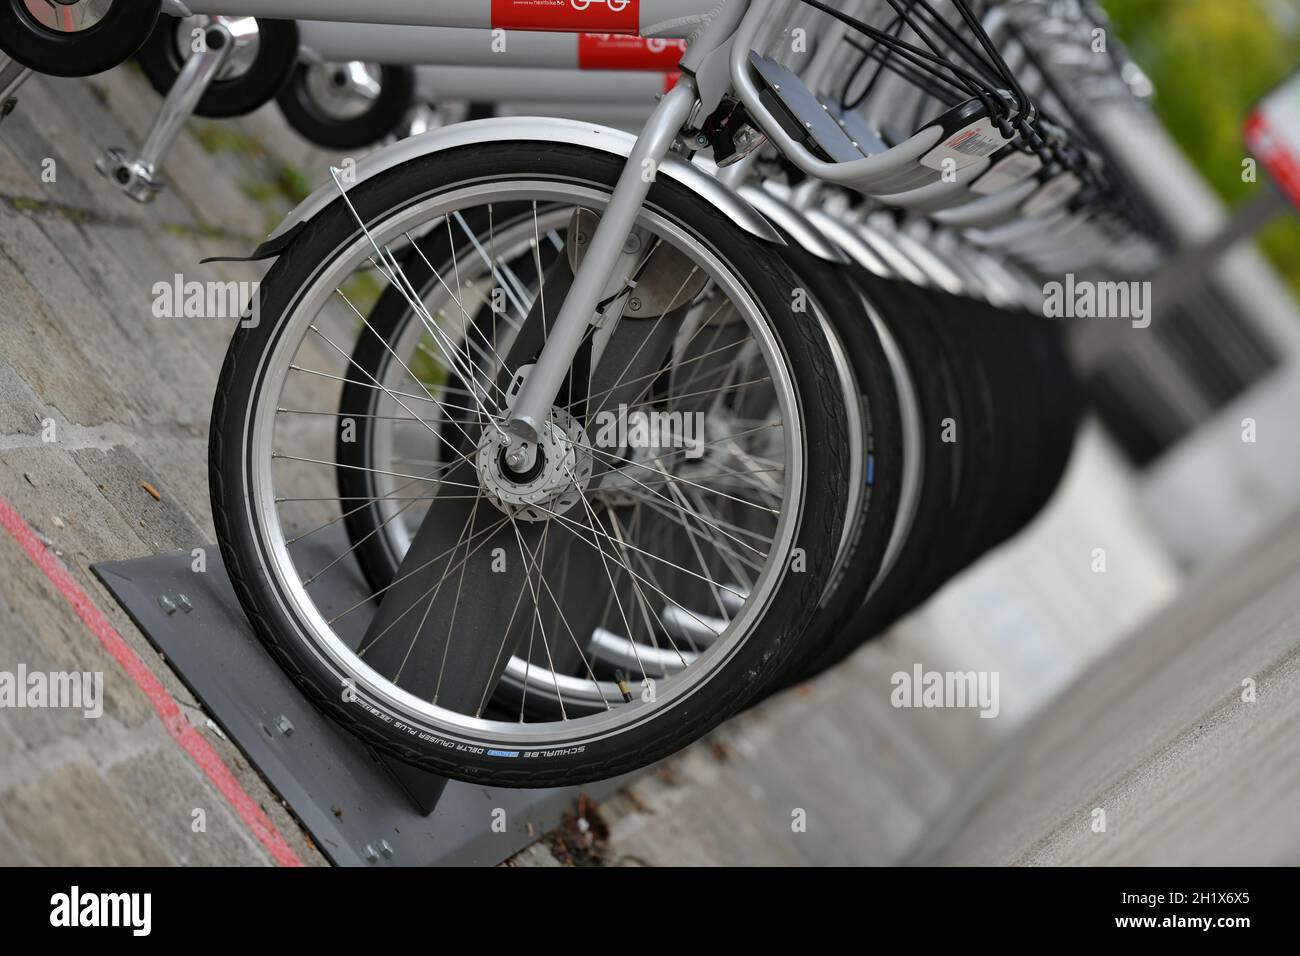 City Bikes zum Ausleihen in Linz, Oberösterreich, Österreich, Europa - City  bikes for hire in Linz, Upper Austria, Austria, Europe Stock Photo - Alamy